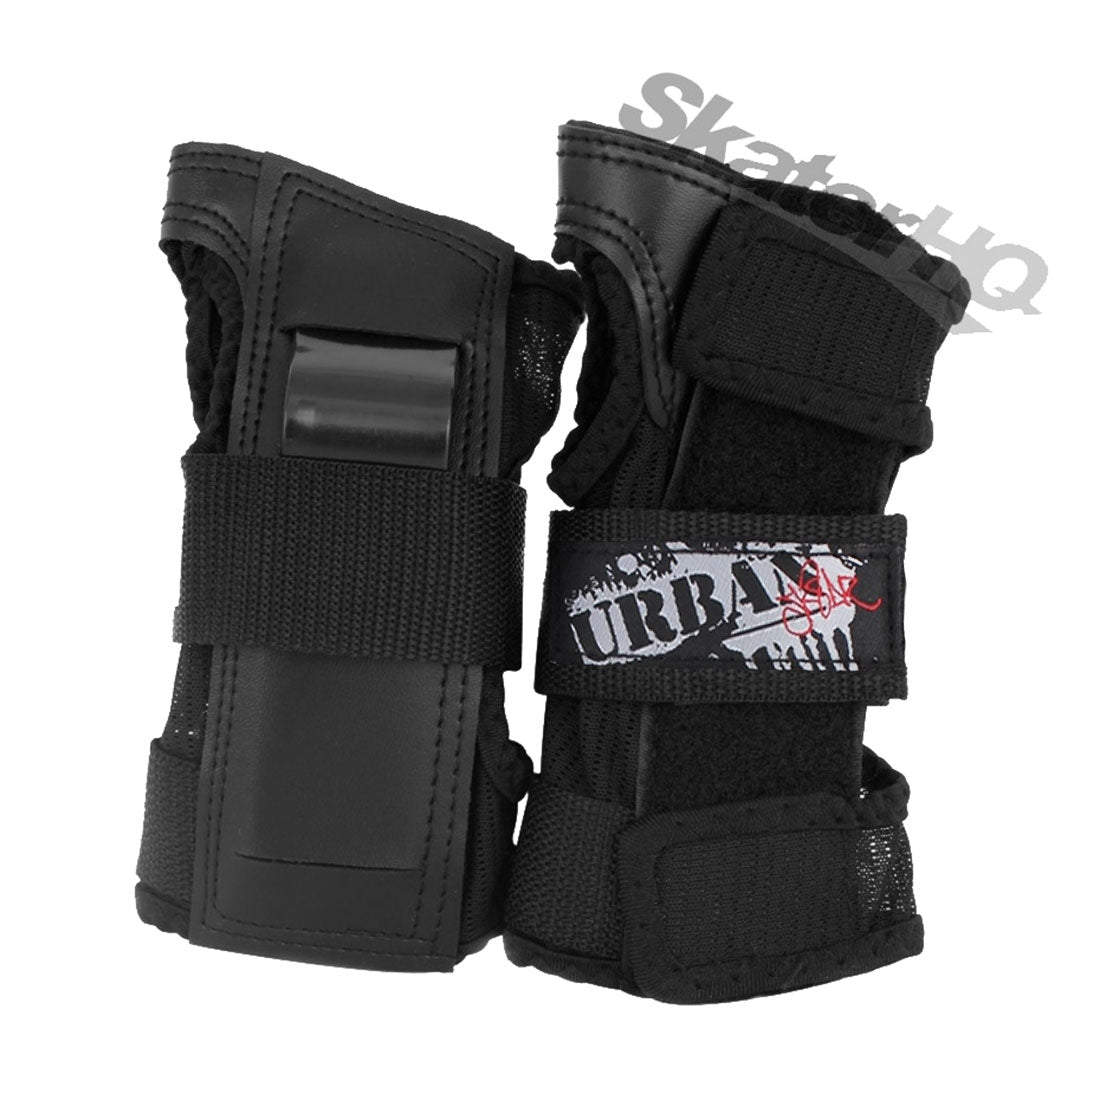 Urban Skater Wrist Guards - Medium Protective Gear